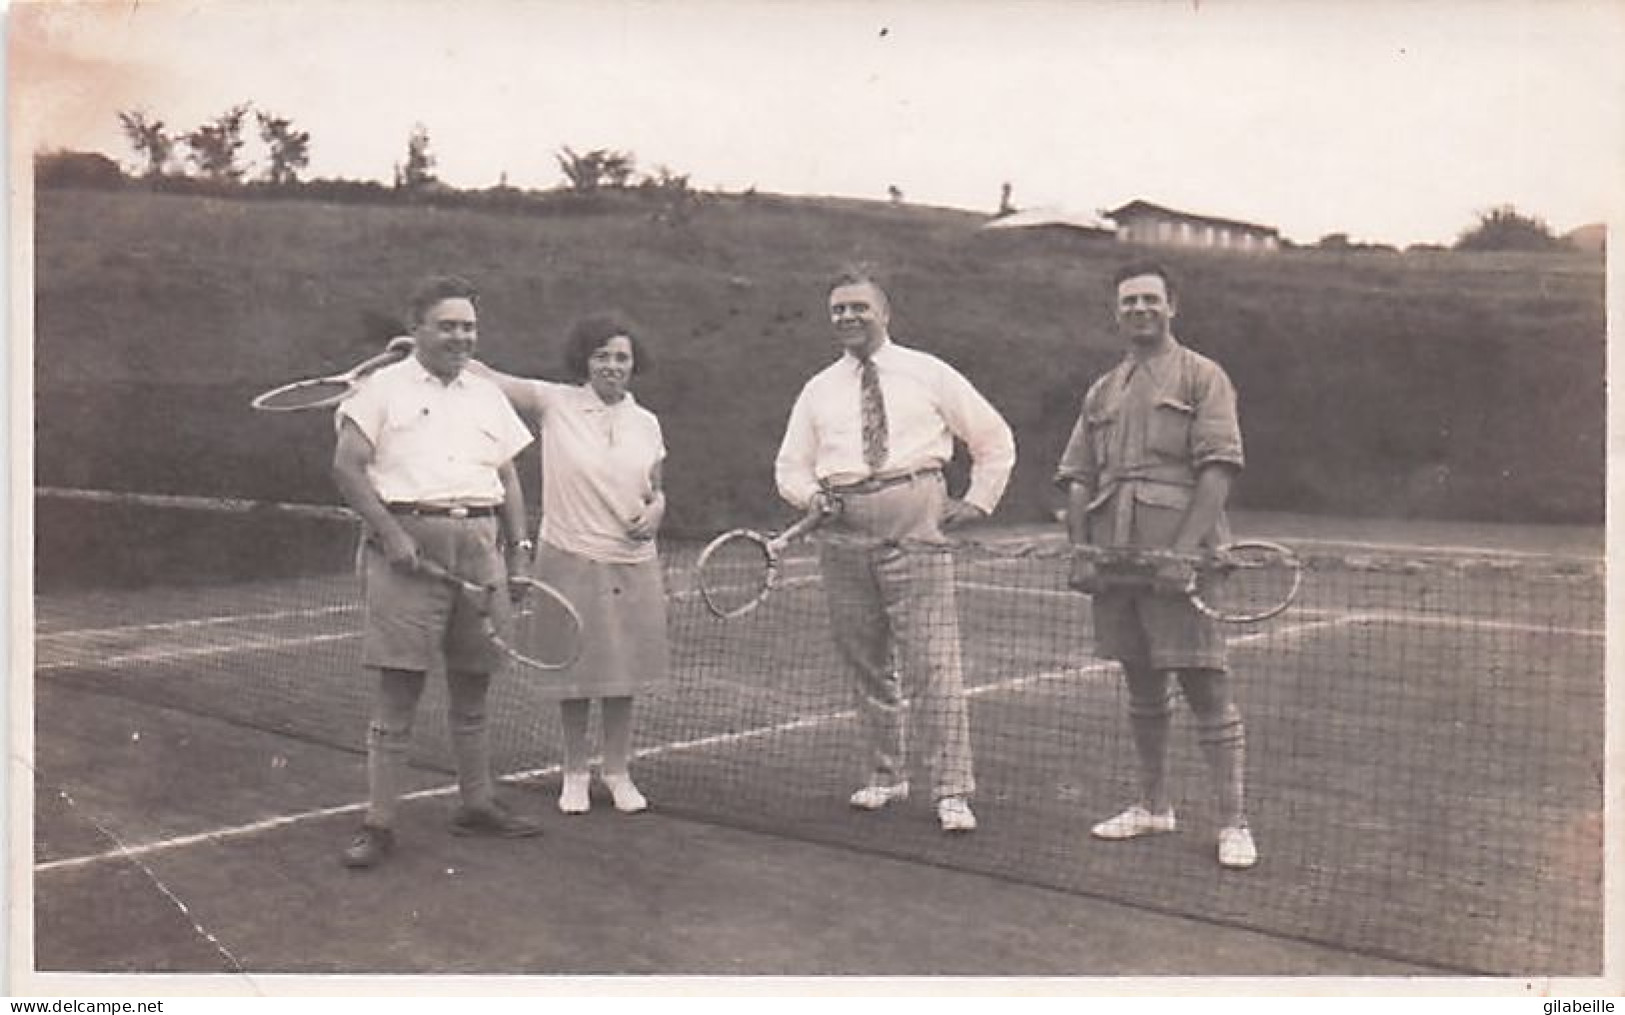 Tennis - Photo Originale 1954 - La Pose Photo Avant La Rencontre - Sport